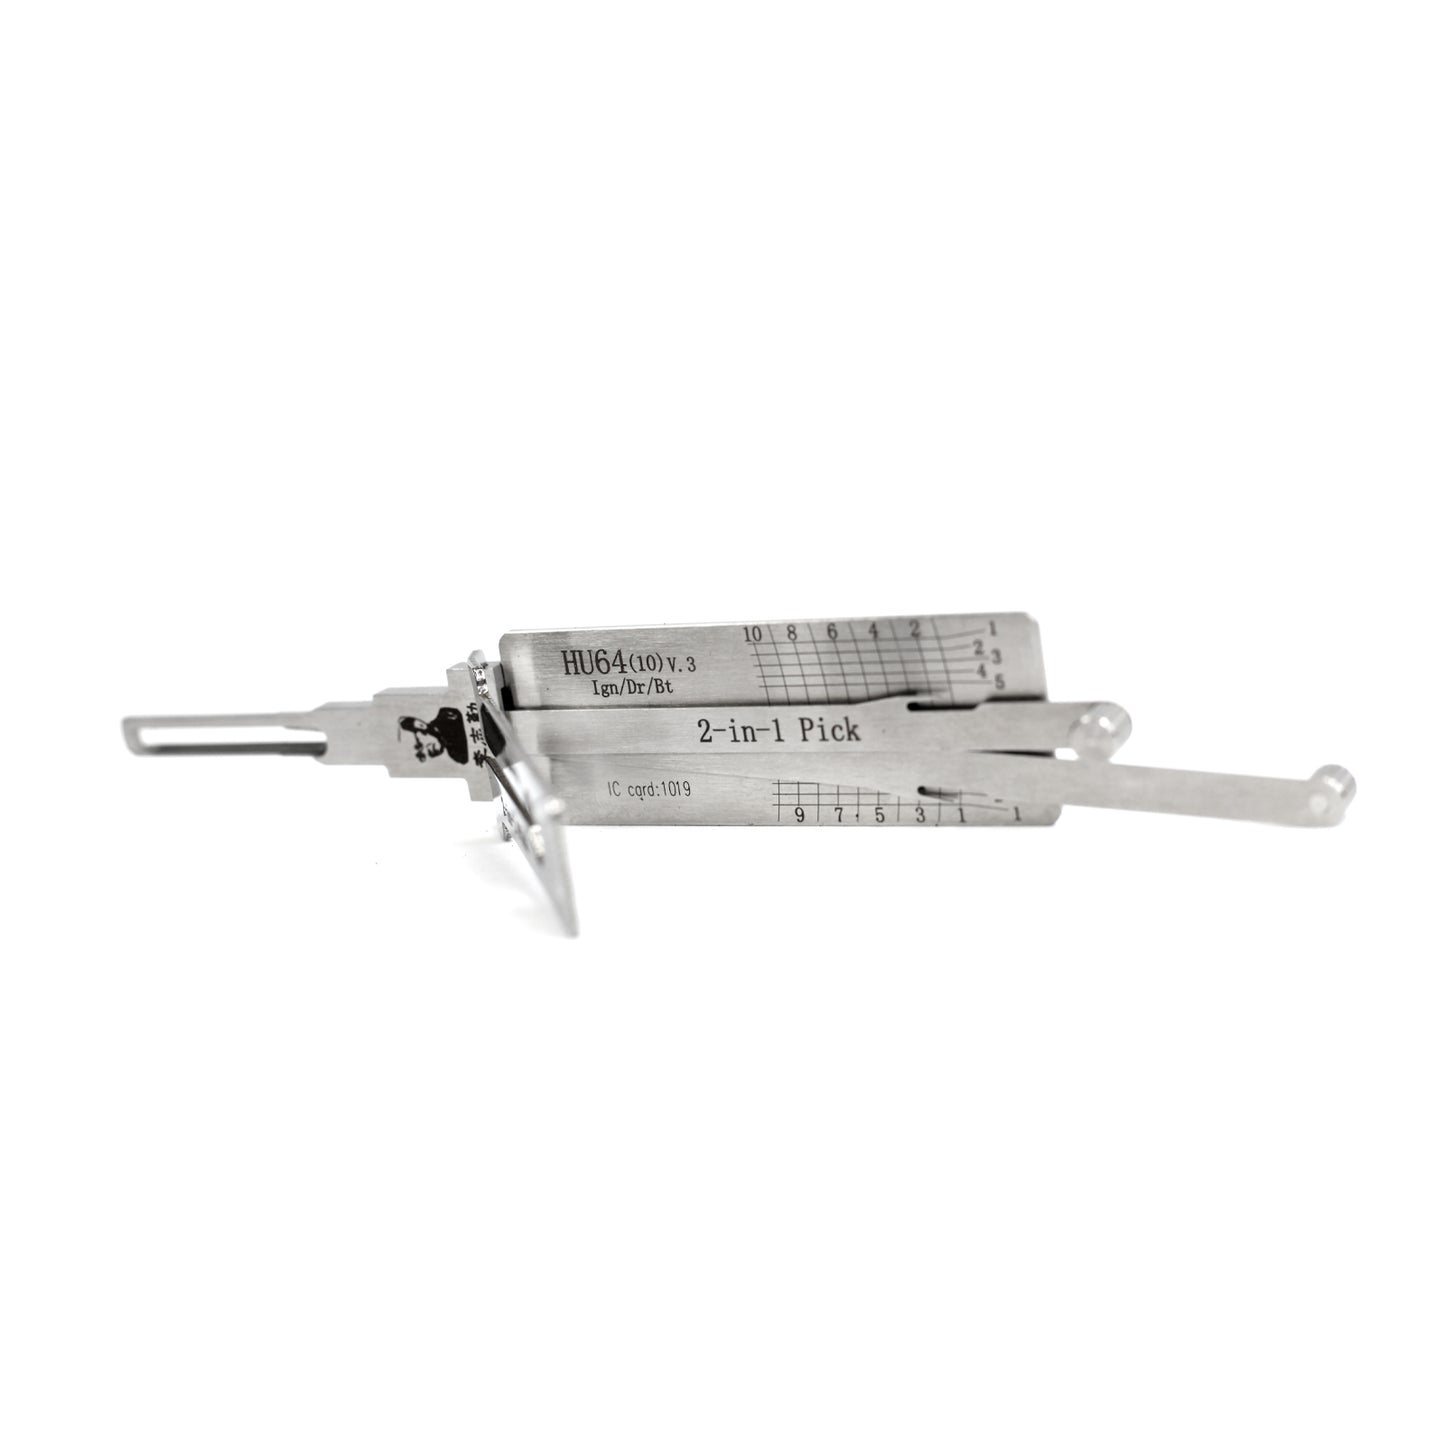 Original auto pick decoder Lock Locksmith Tools Lishi 2-in-1 Unlock ToolHigh(10)V.3 Ign/Dr/Bt